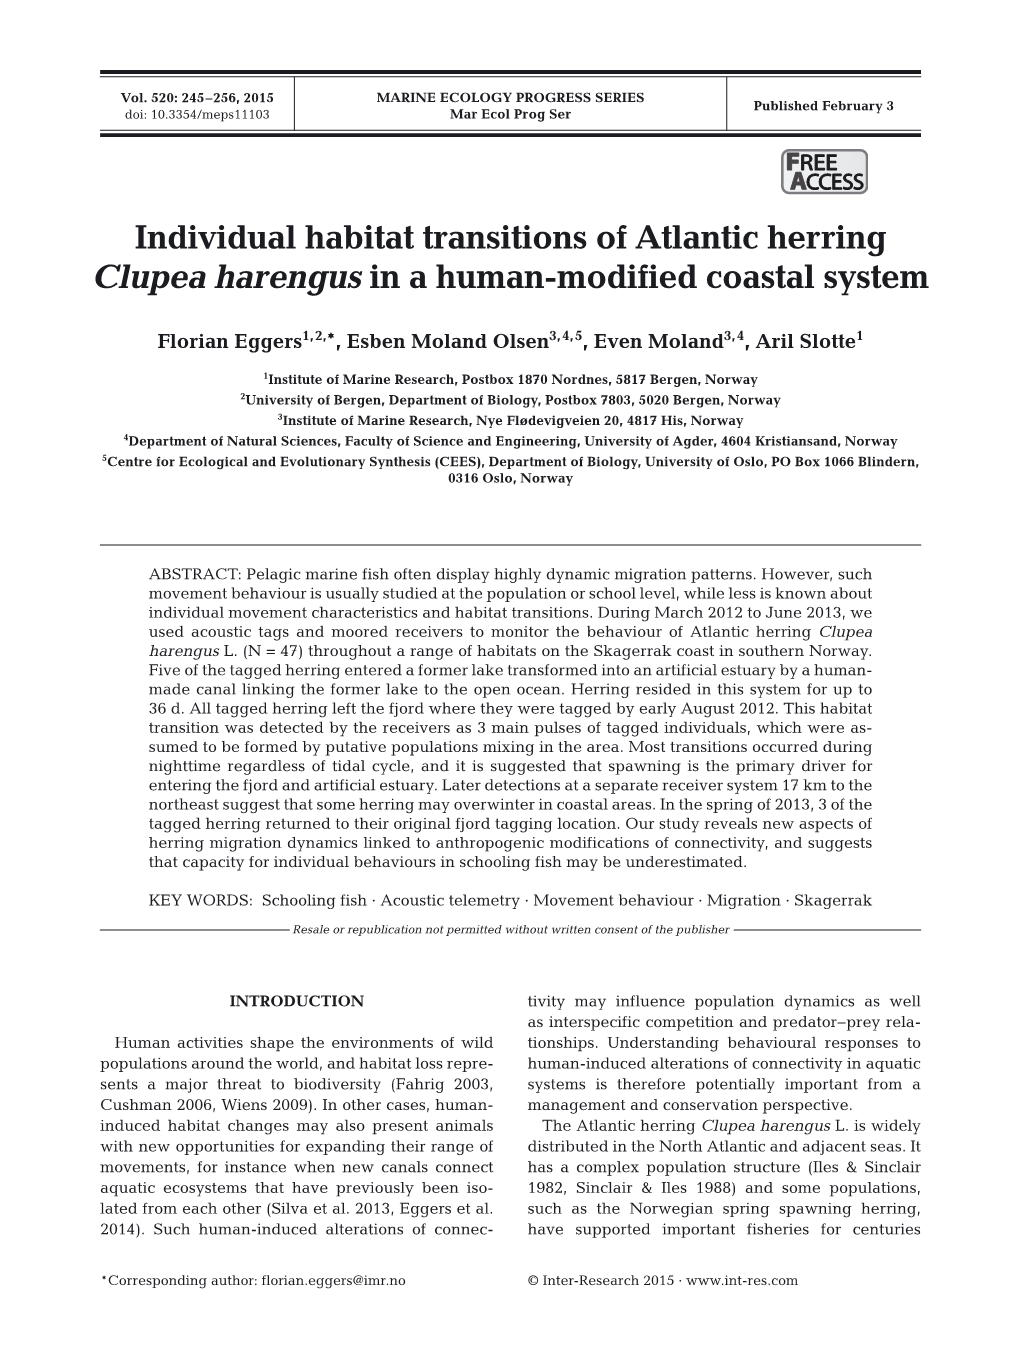 Individual Habitat Transitions of Atlantic Herring Clupea Harengus in a Human-Modified Coastal System